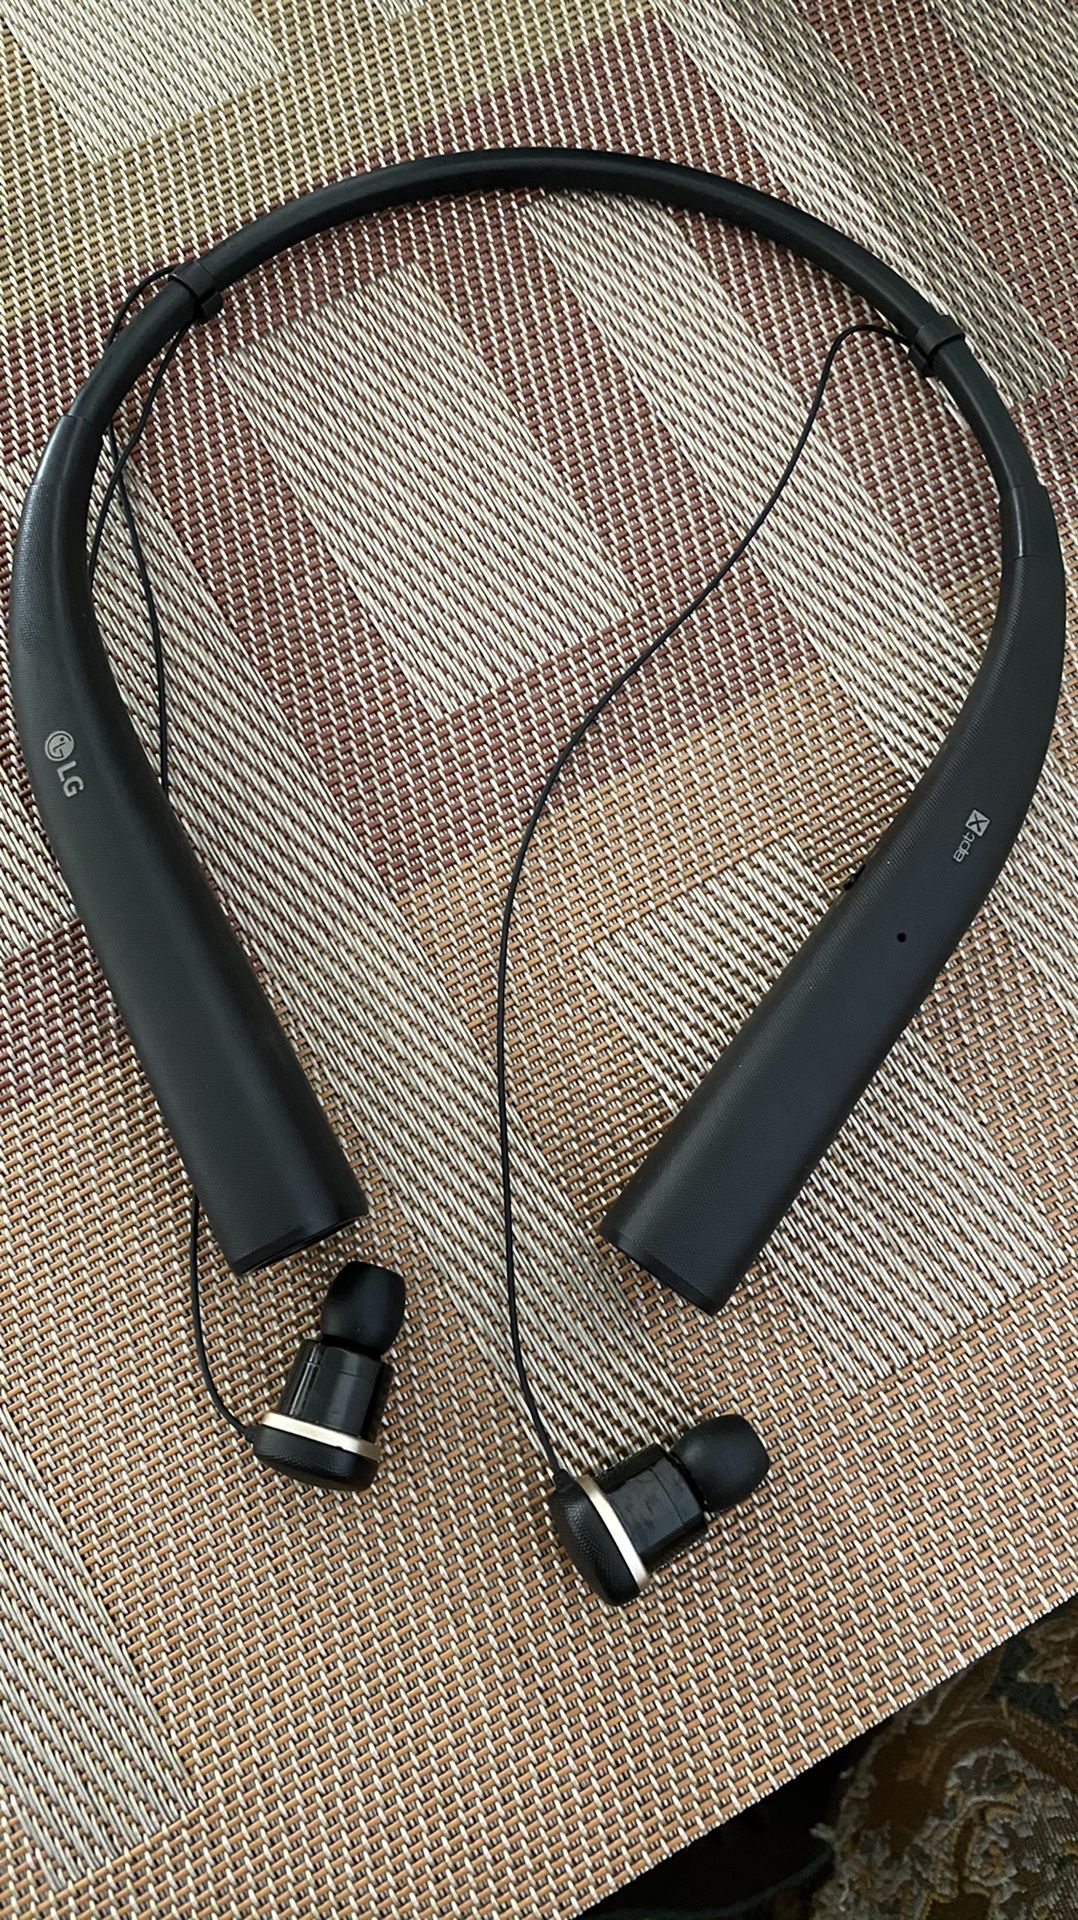 LG stereo Bluetooth headset new model hbs-780